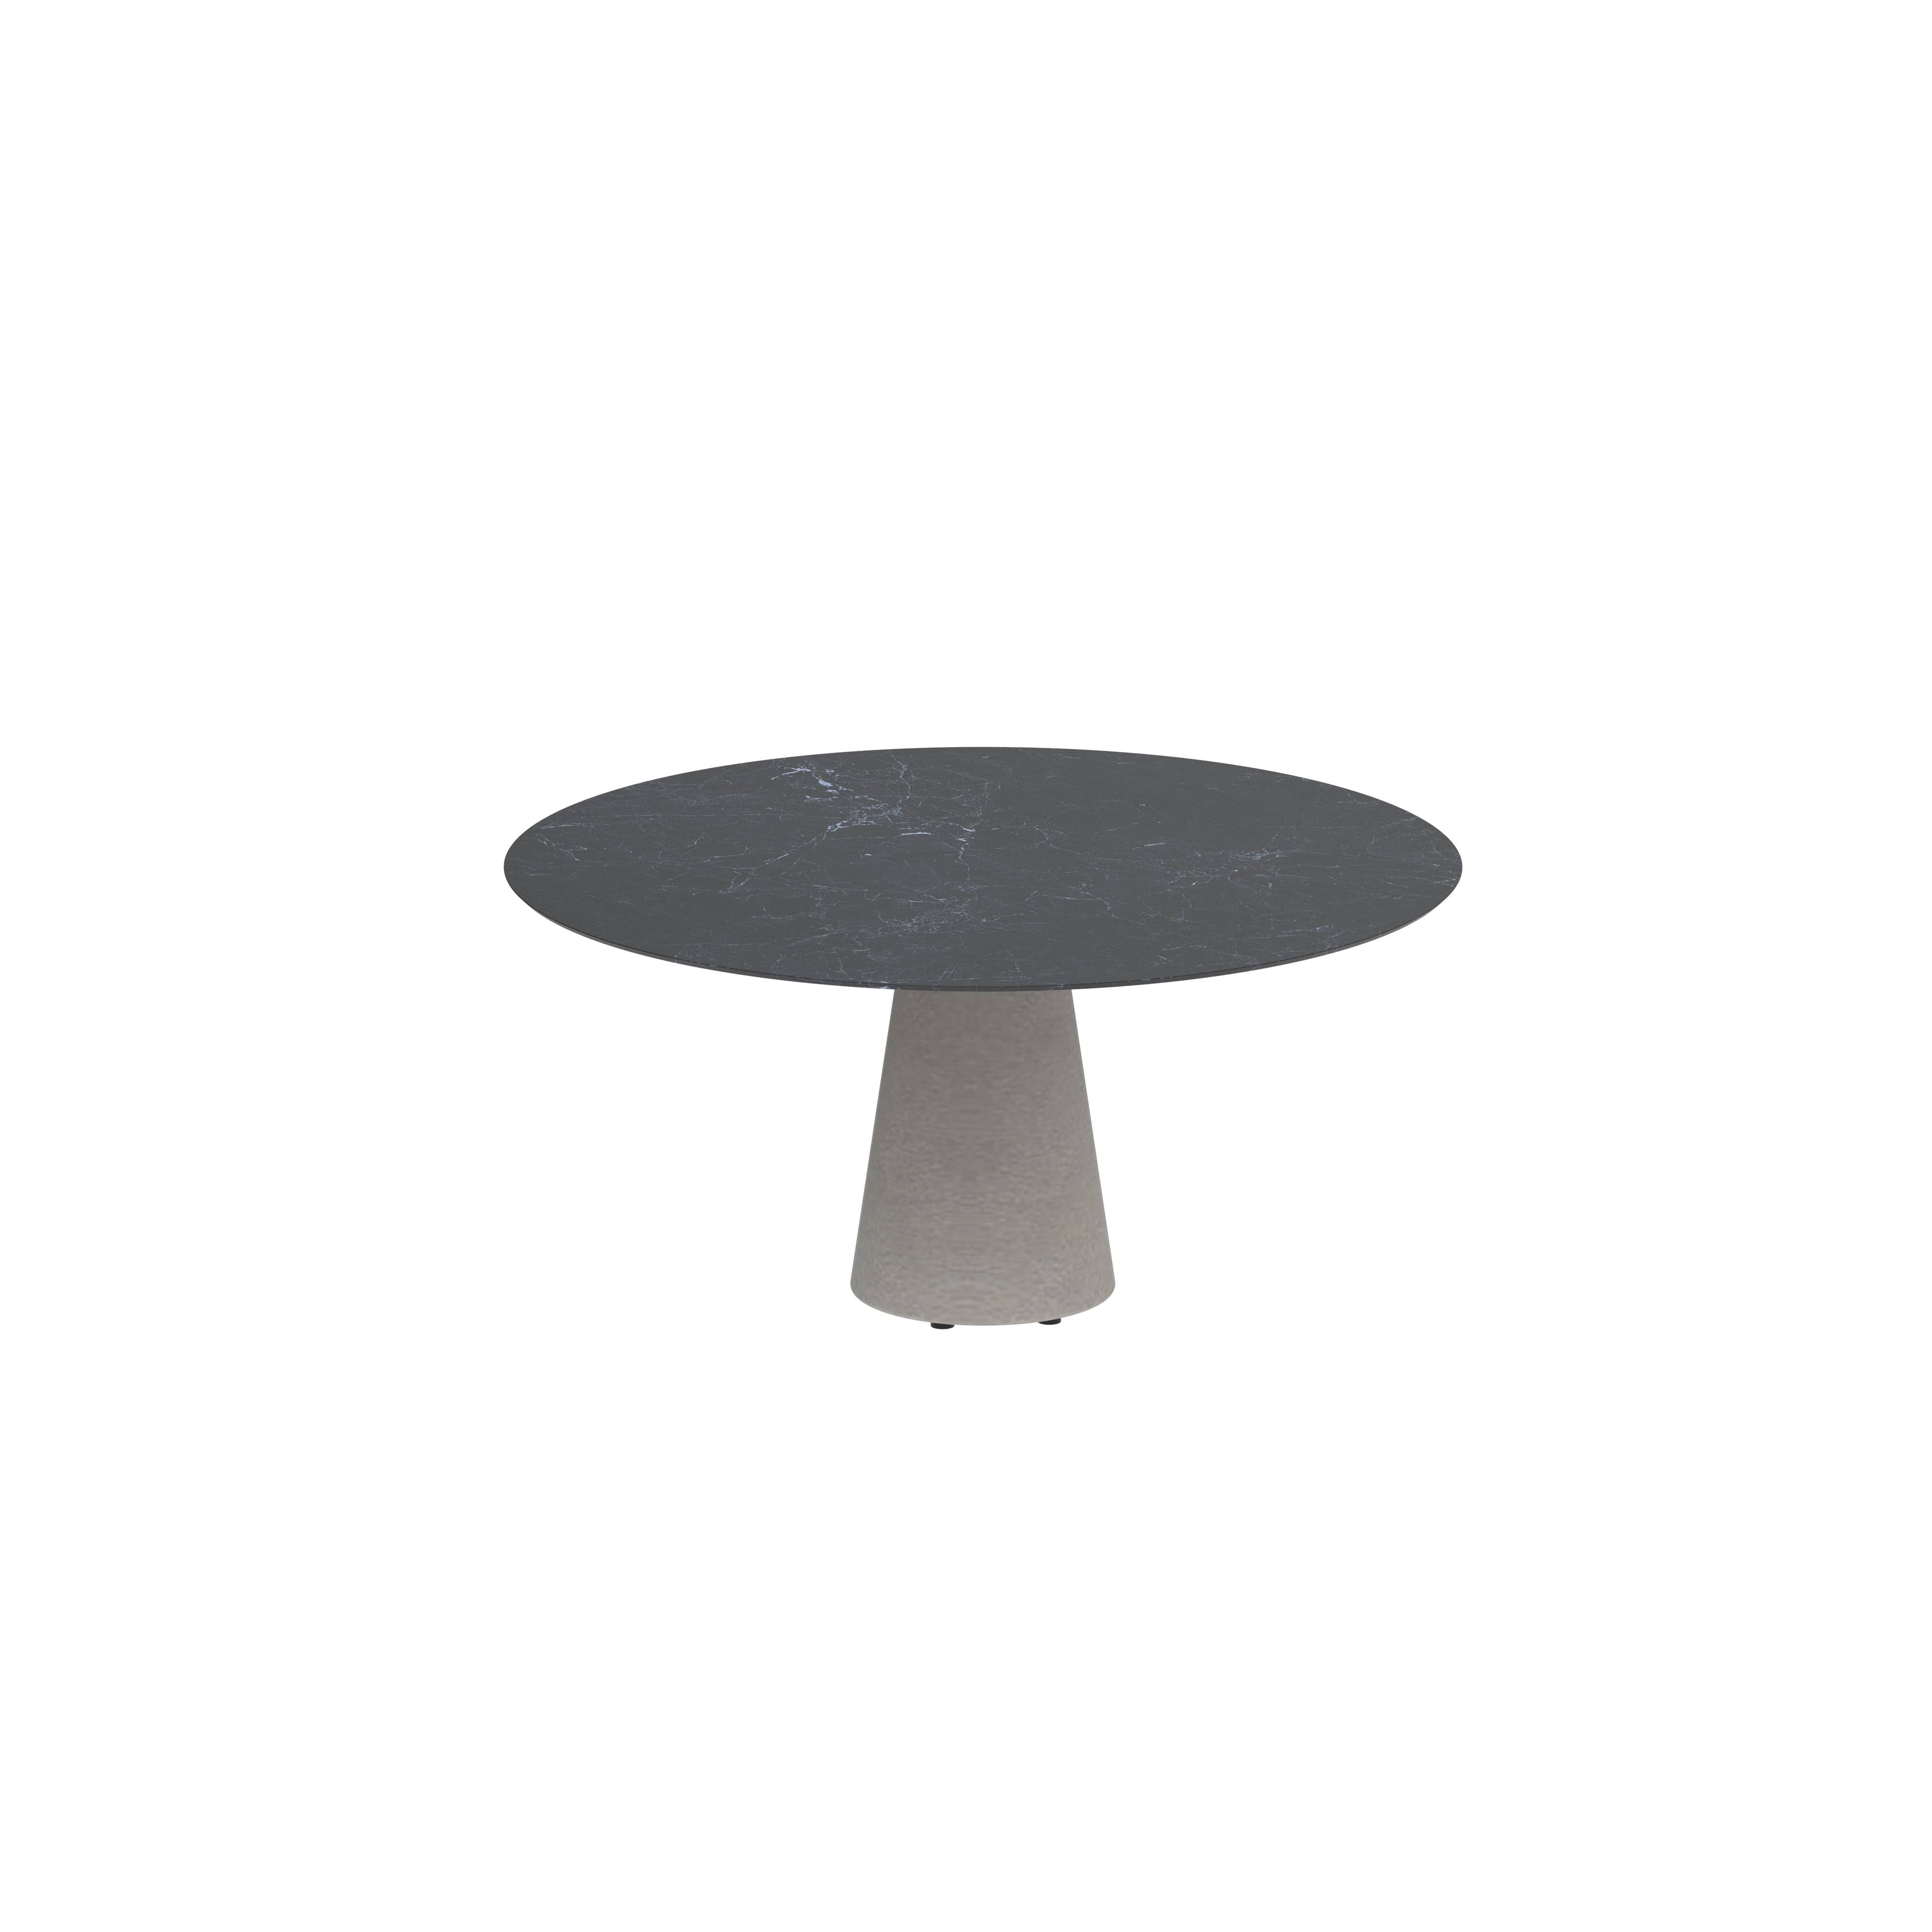 Conix Table Round Ø 160cm Legs Concrete Cement Grey - Tabletop Ceramic Nero Marquina